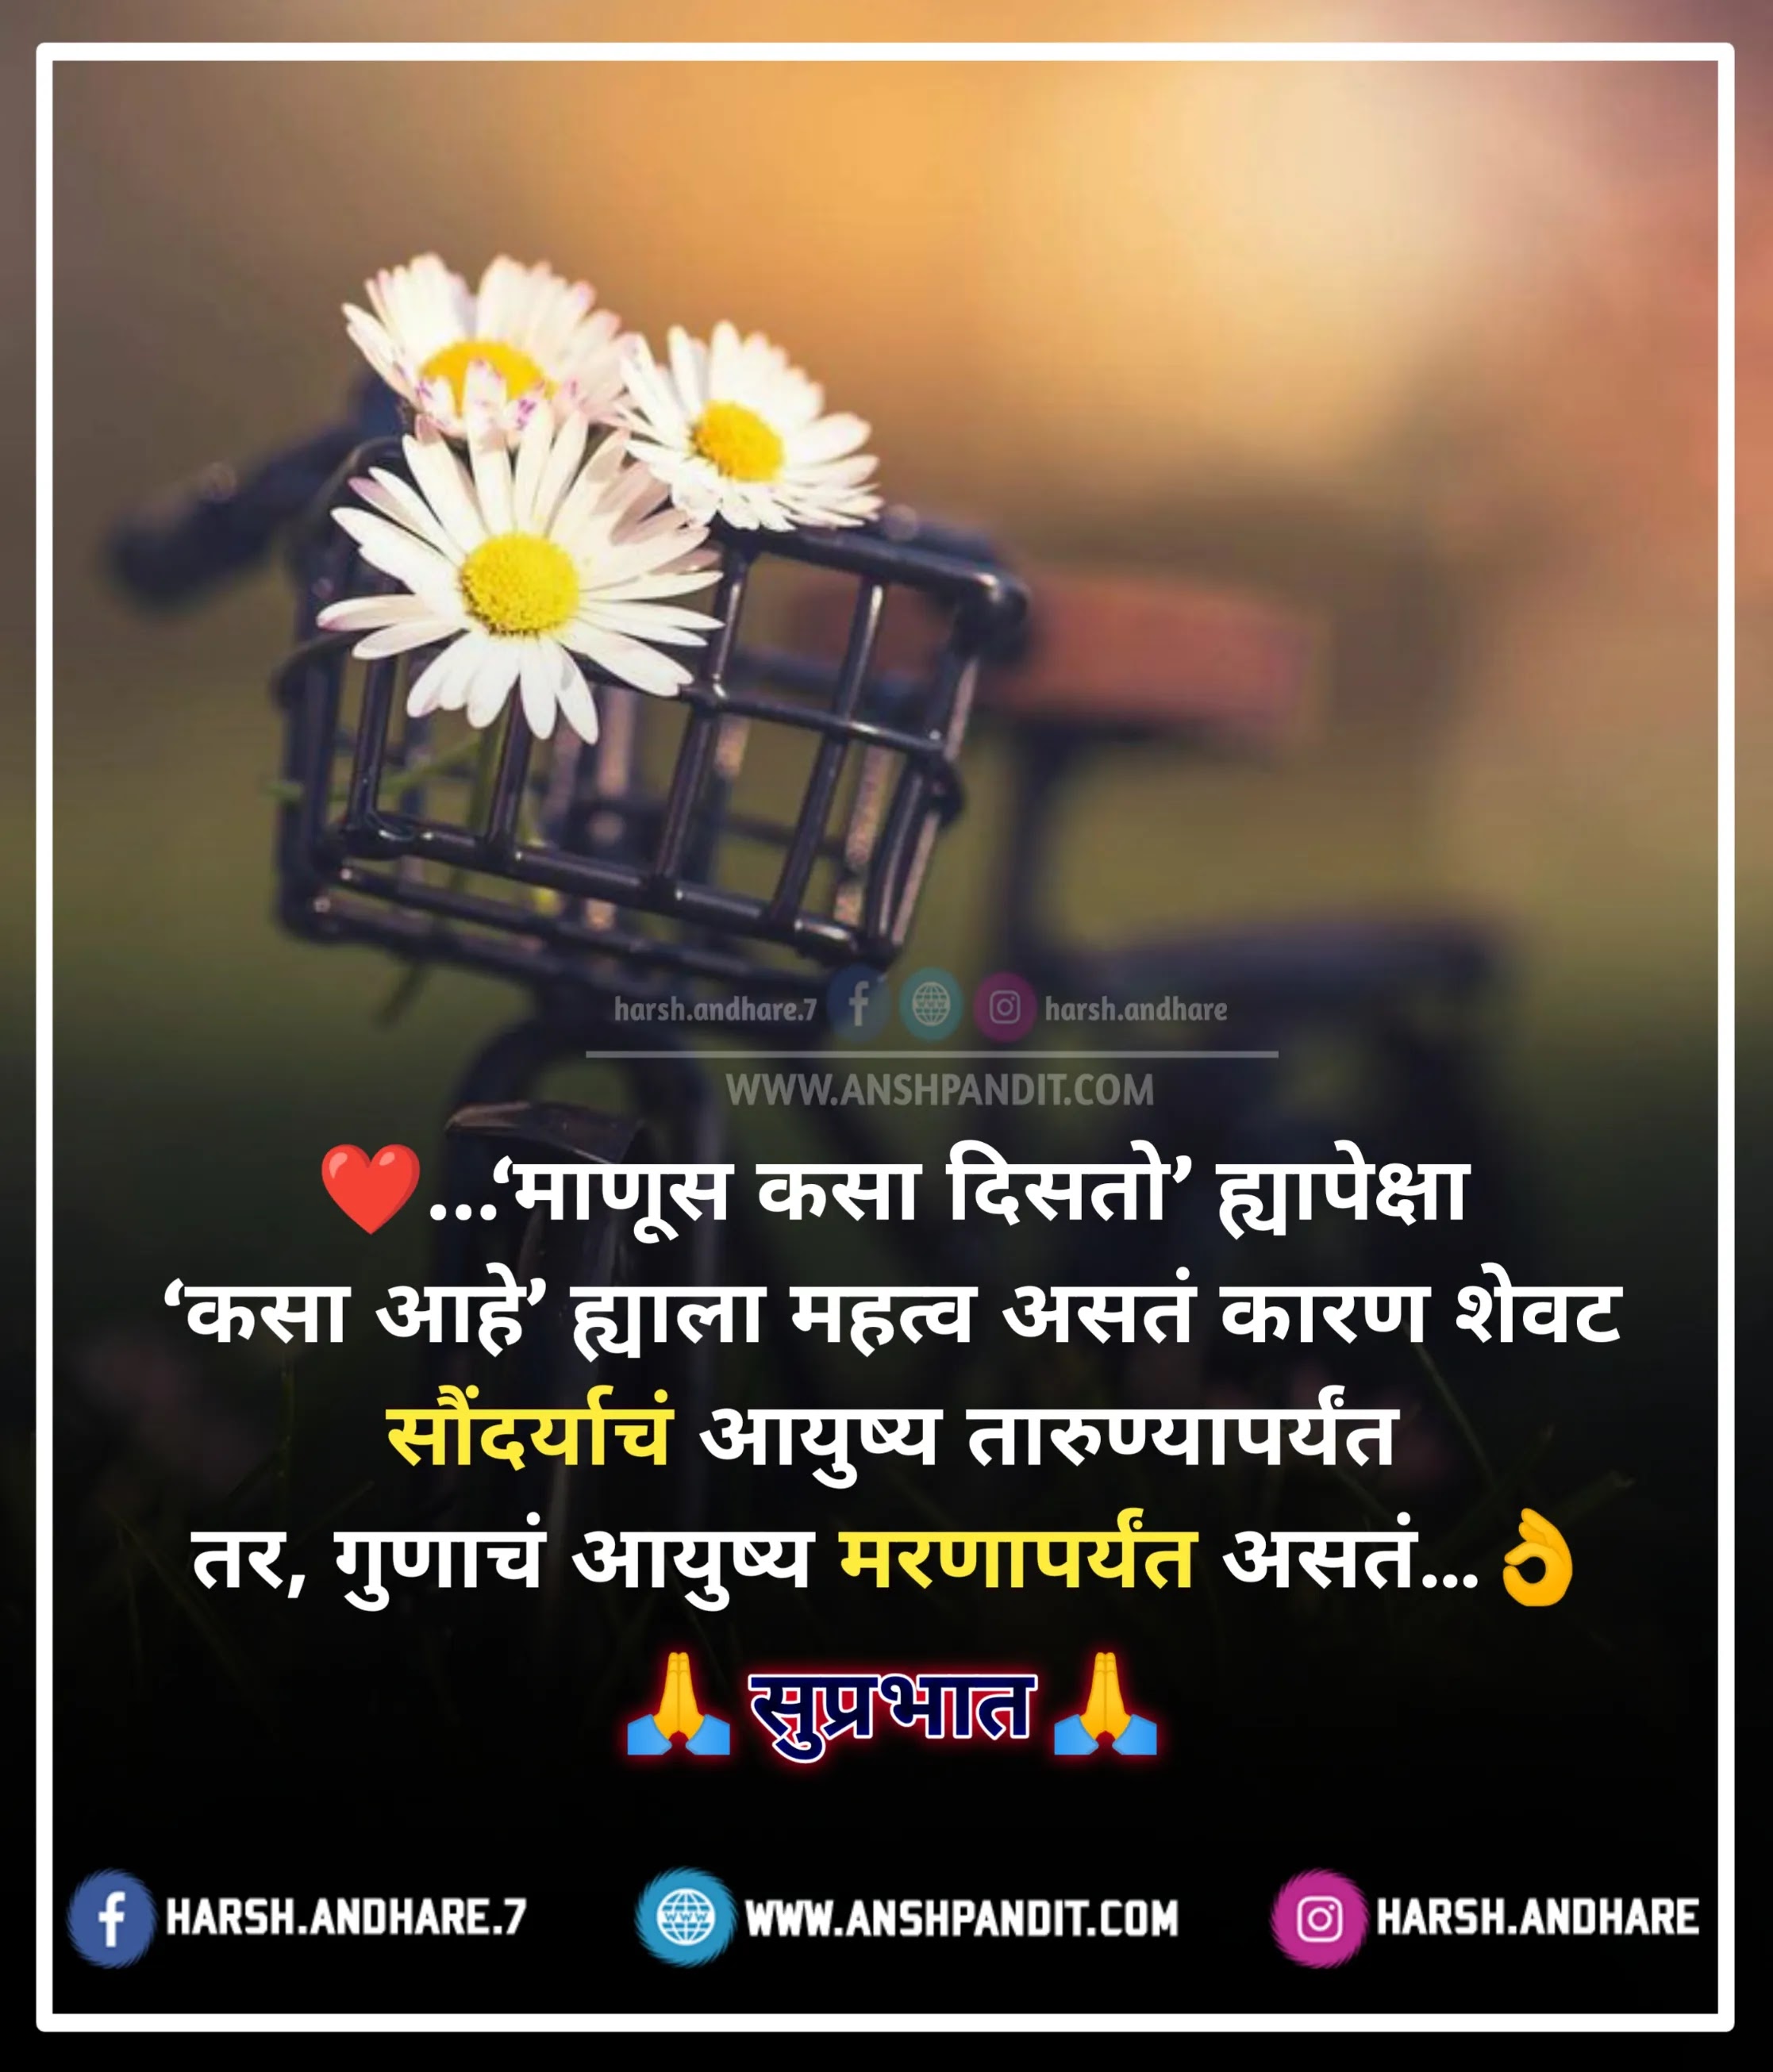 Good Morning Message in Marathi Images